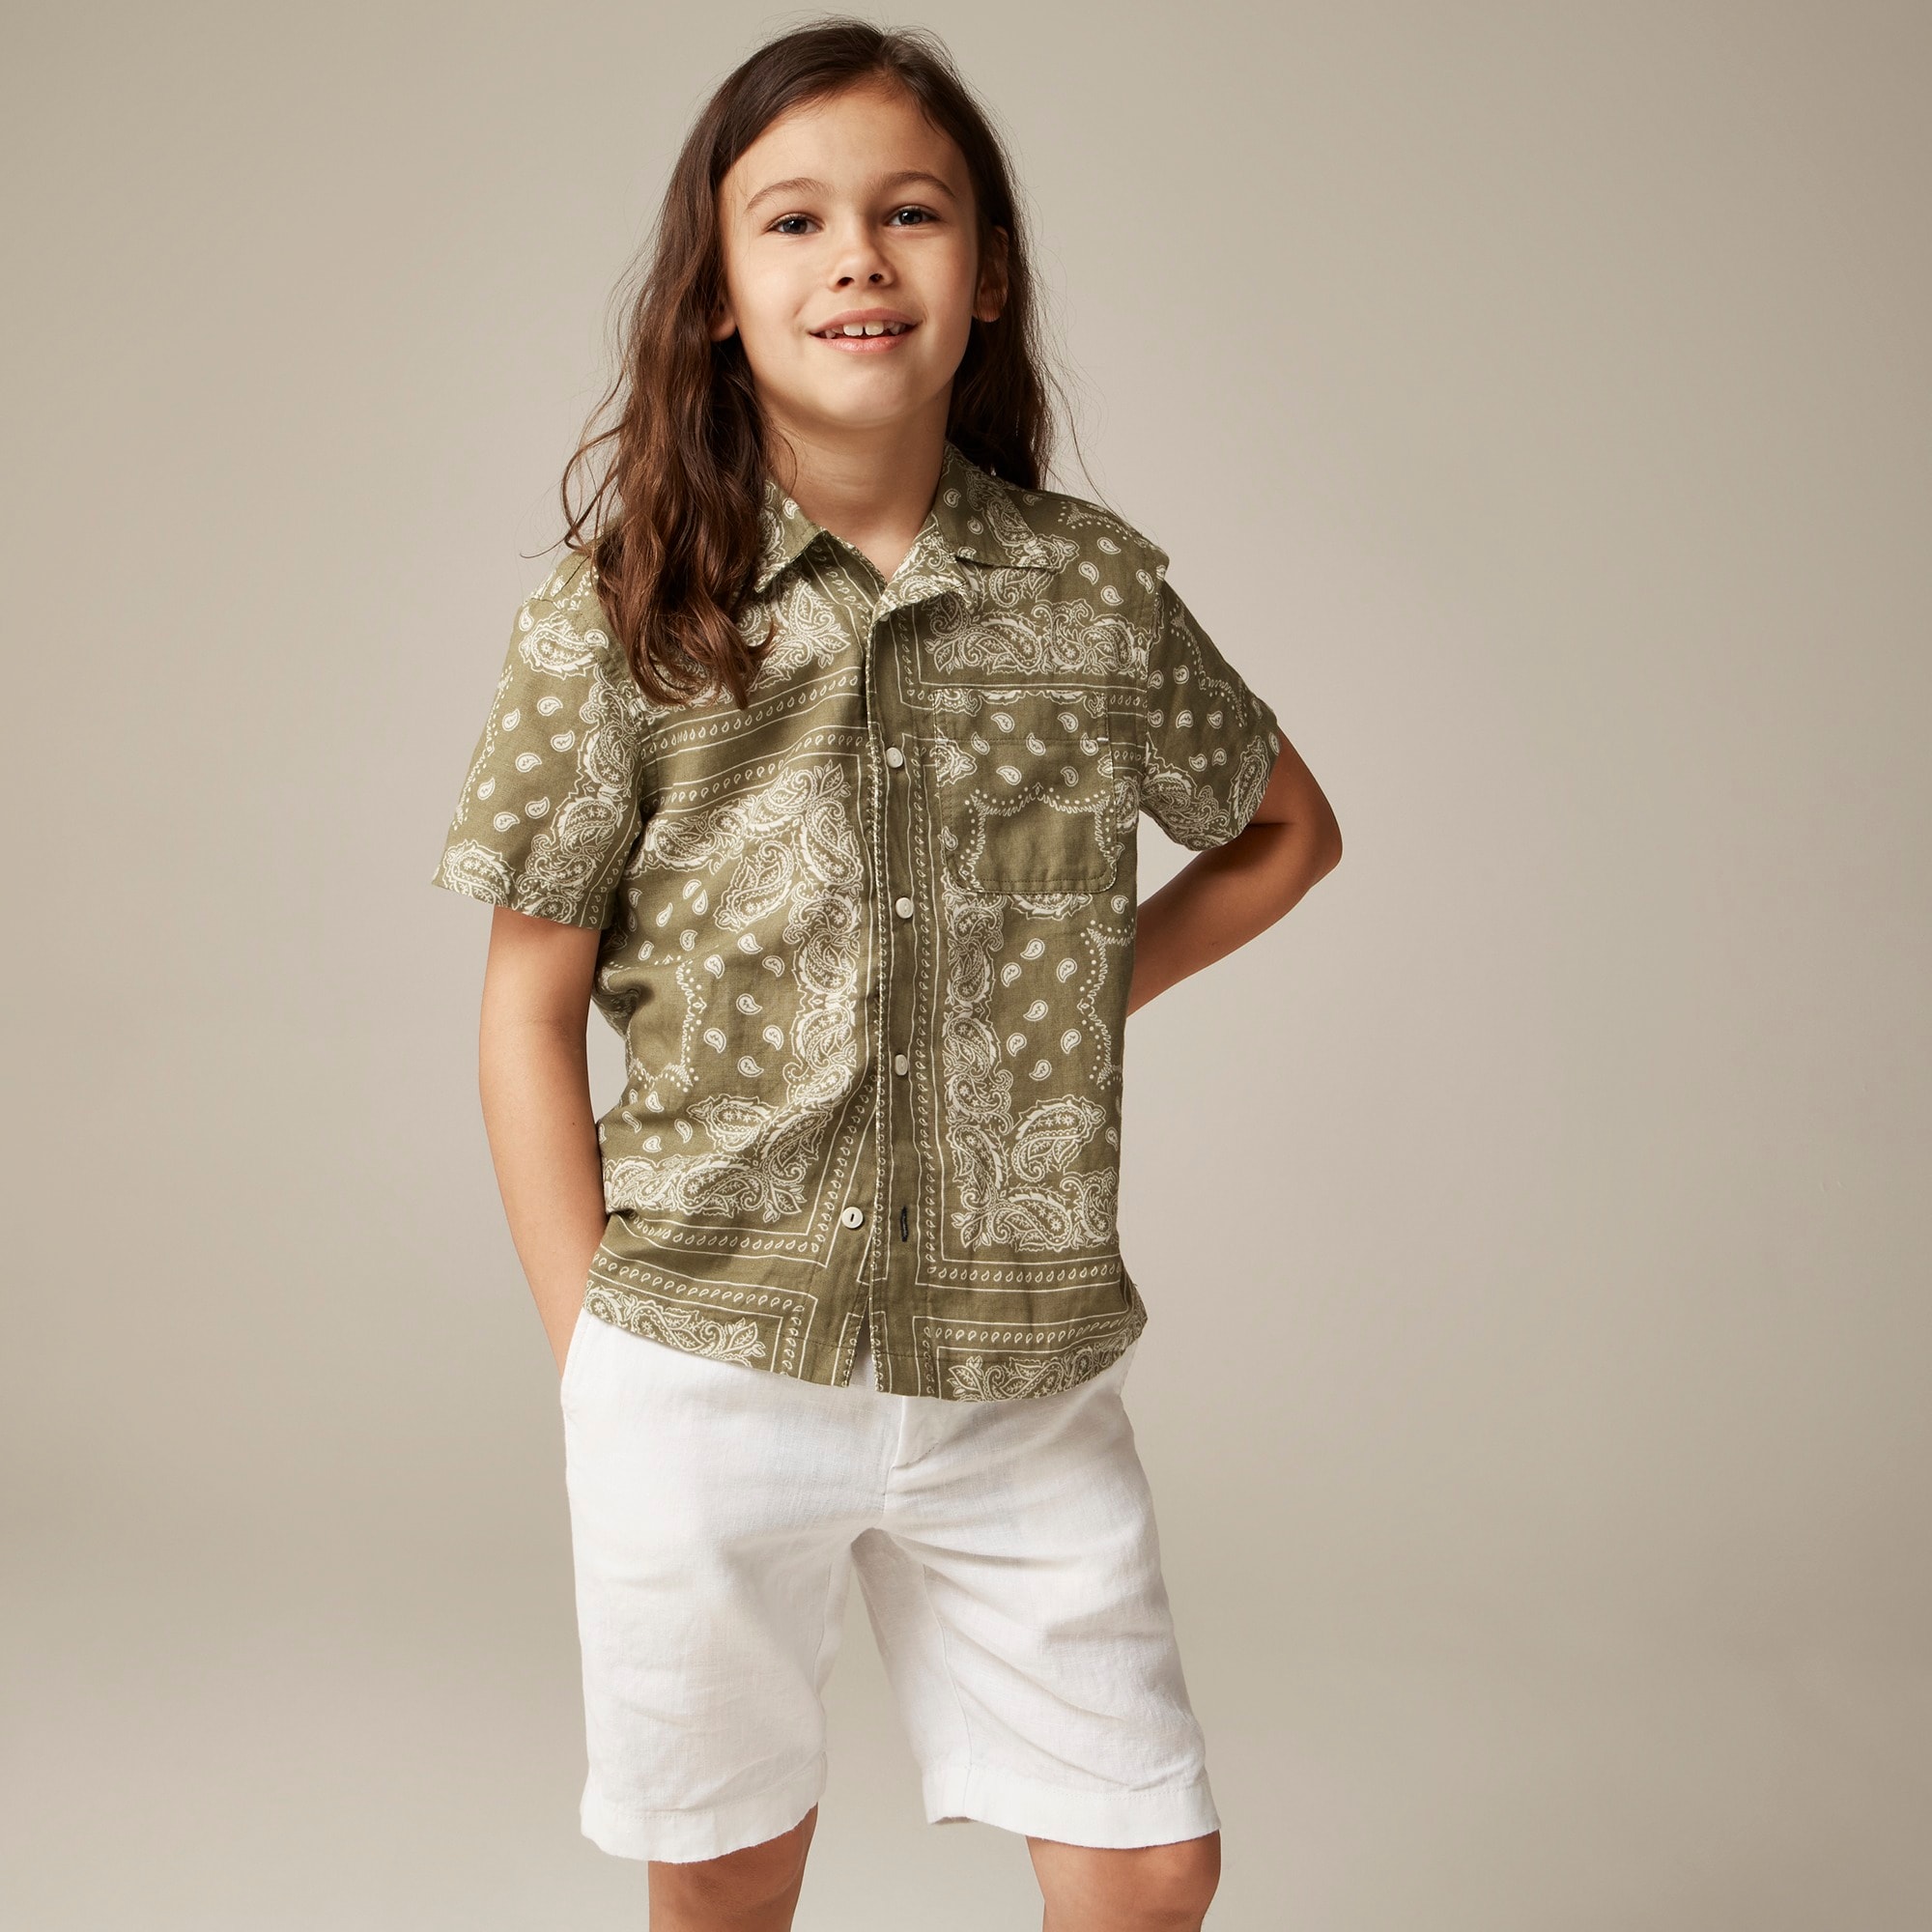  Kids' printed short-sleeve camp shirt in linen-cotton blend